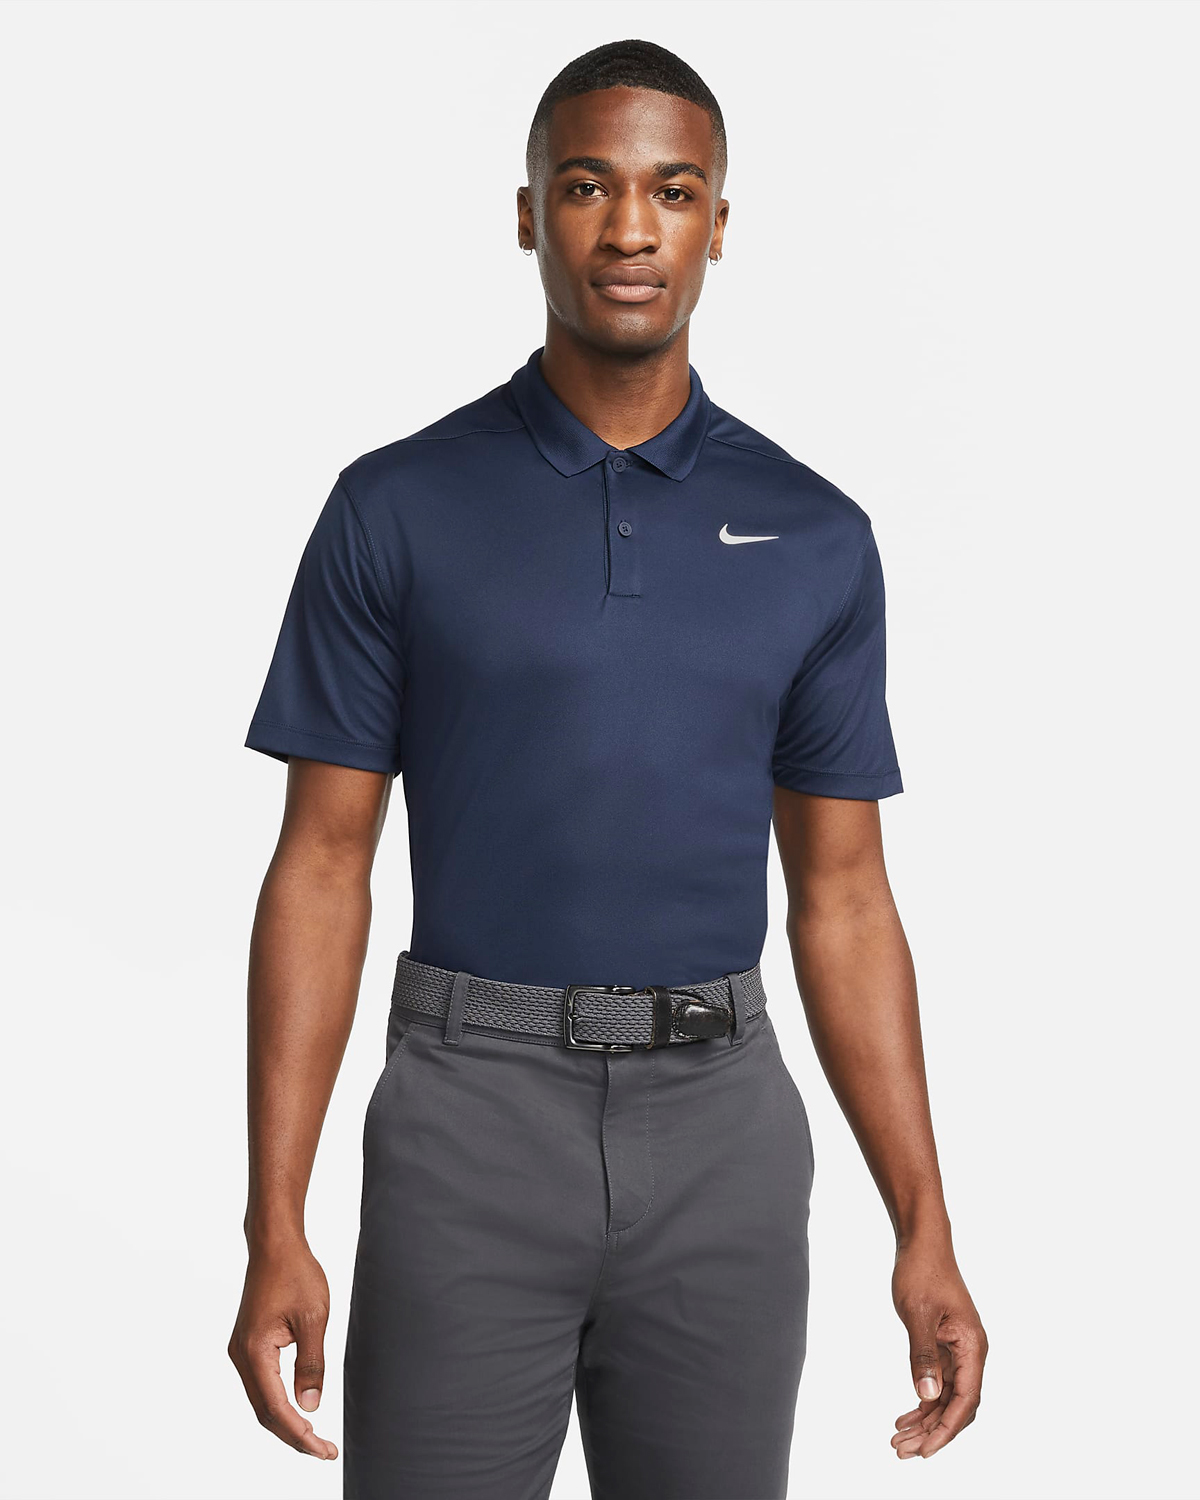 Air Jordan 1 High Golf Midnight Navy Shirts Clothing Outfits